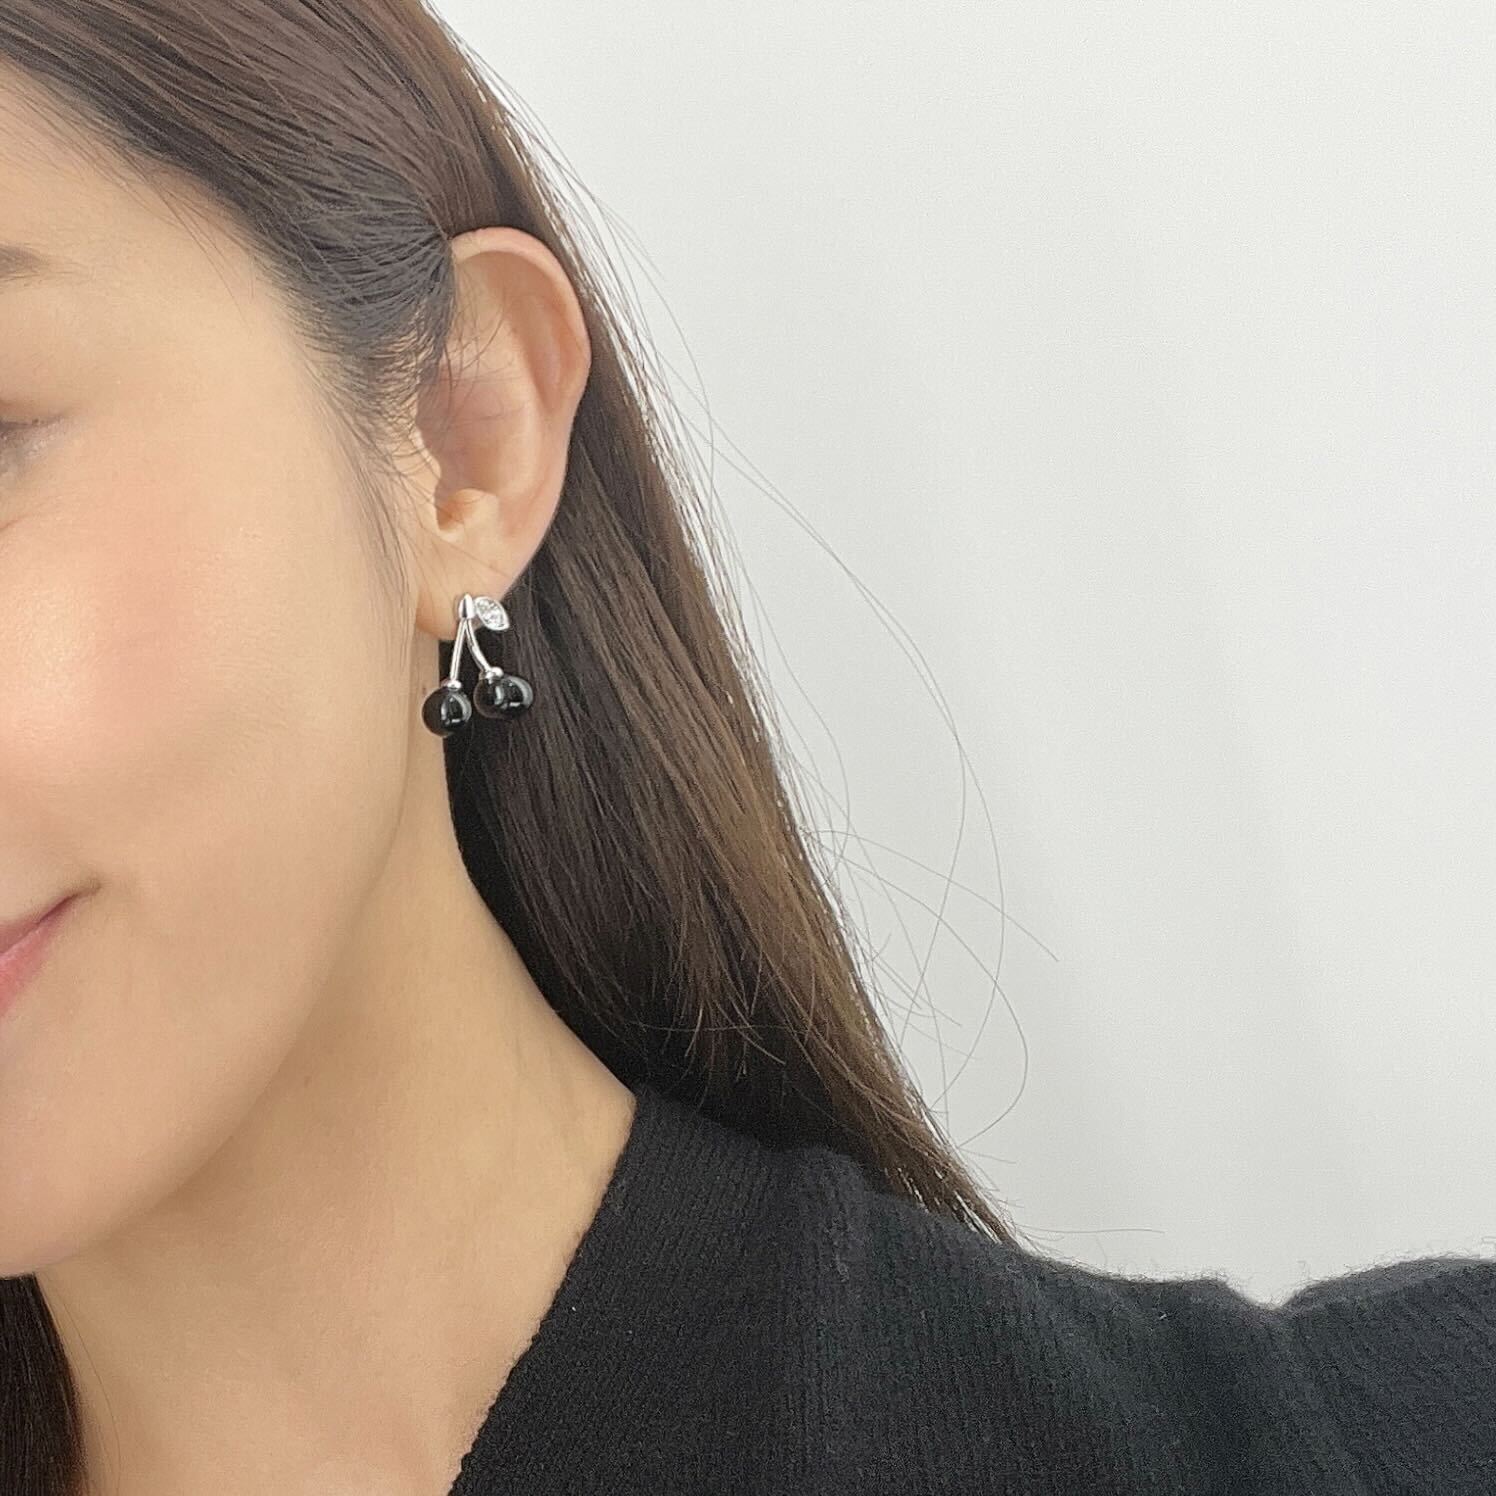 Sakuranbo Pearl pierce & earring(さくらんぼパールピアス&イヤリング